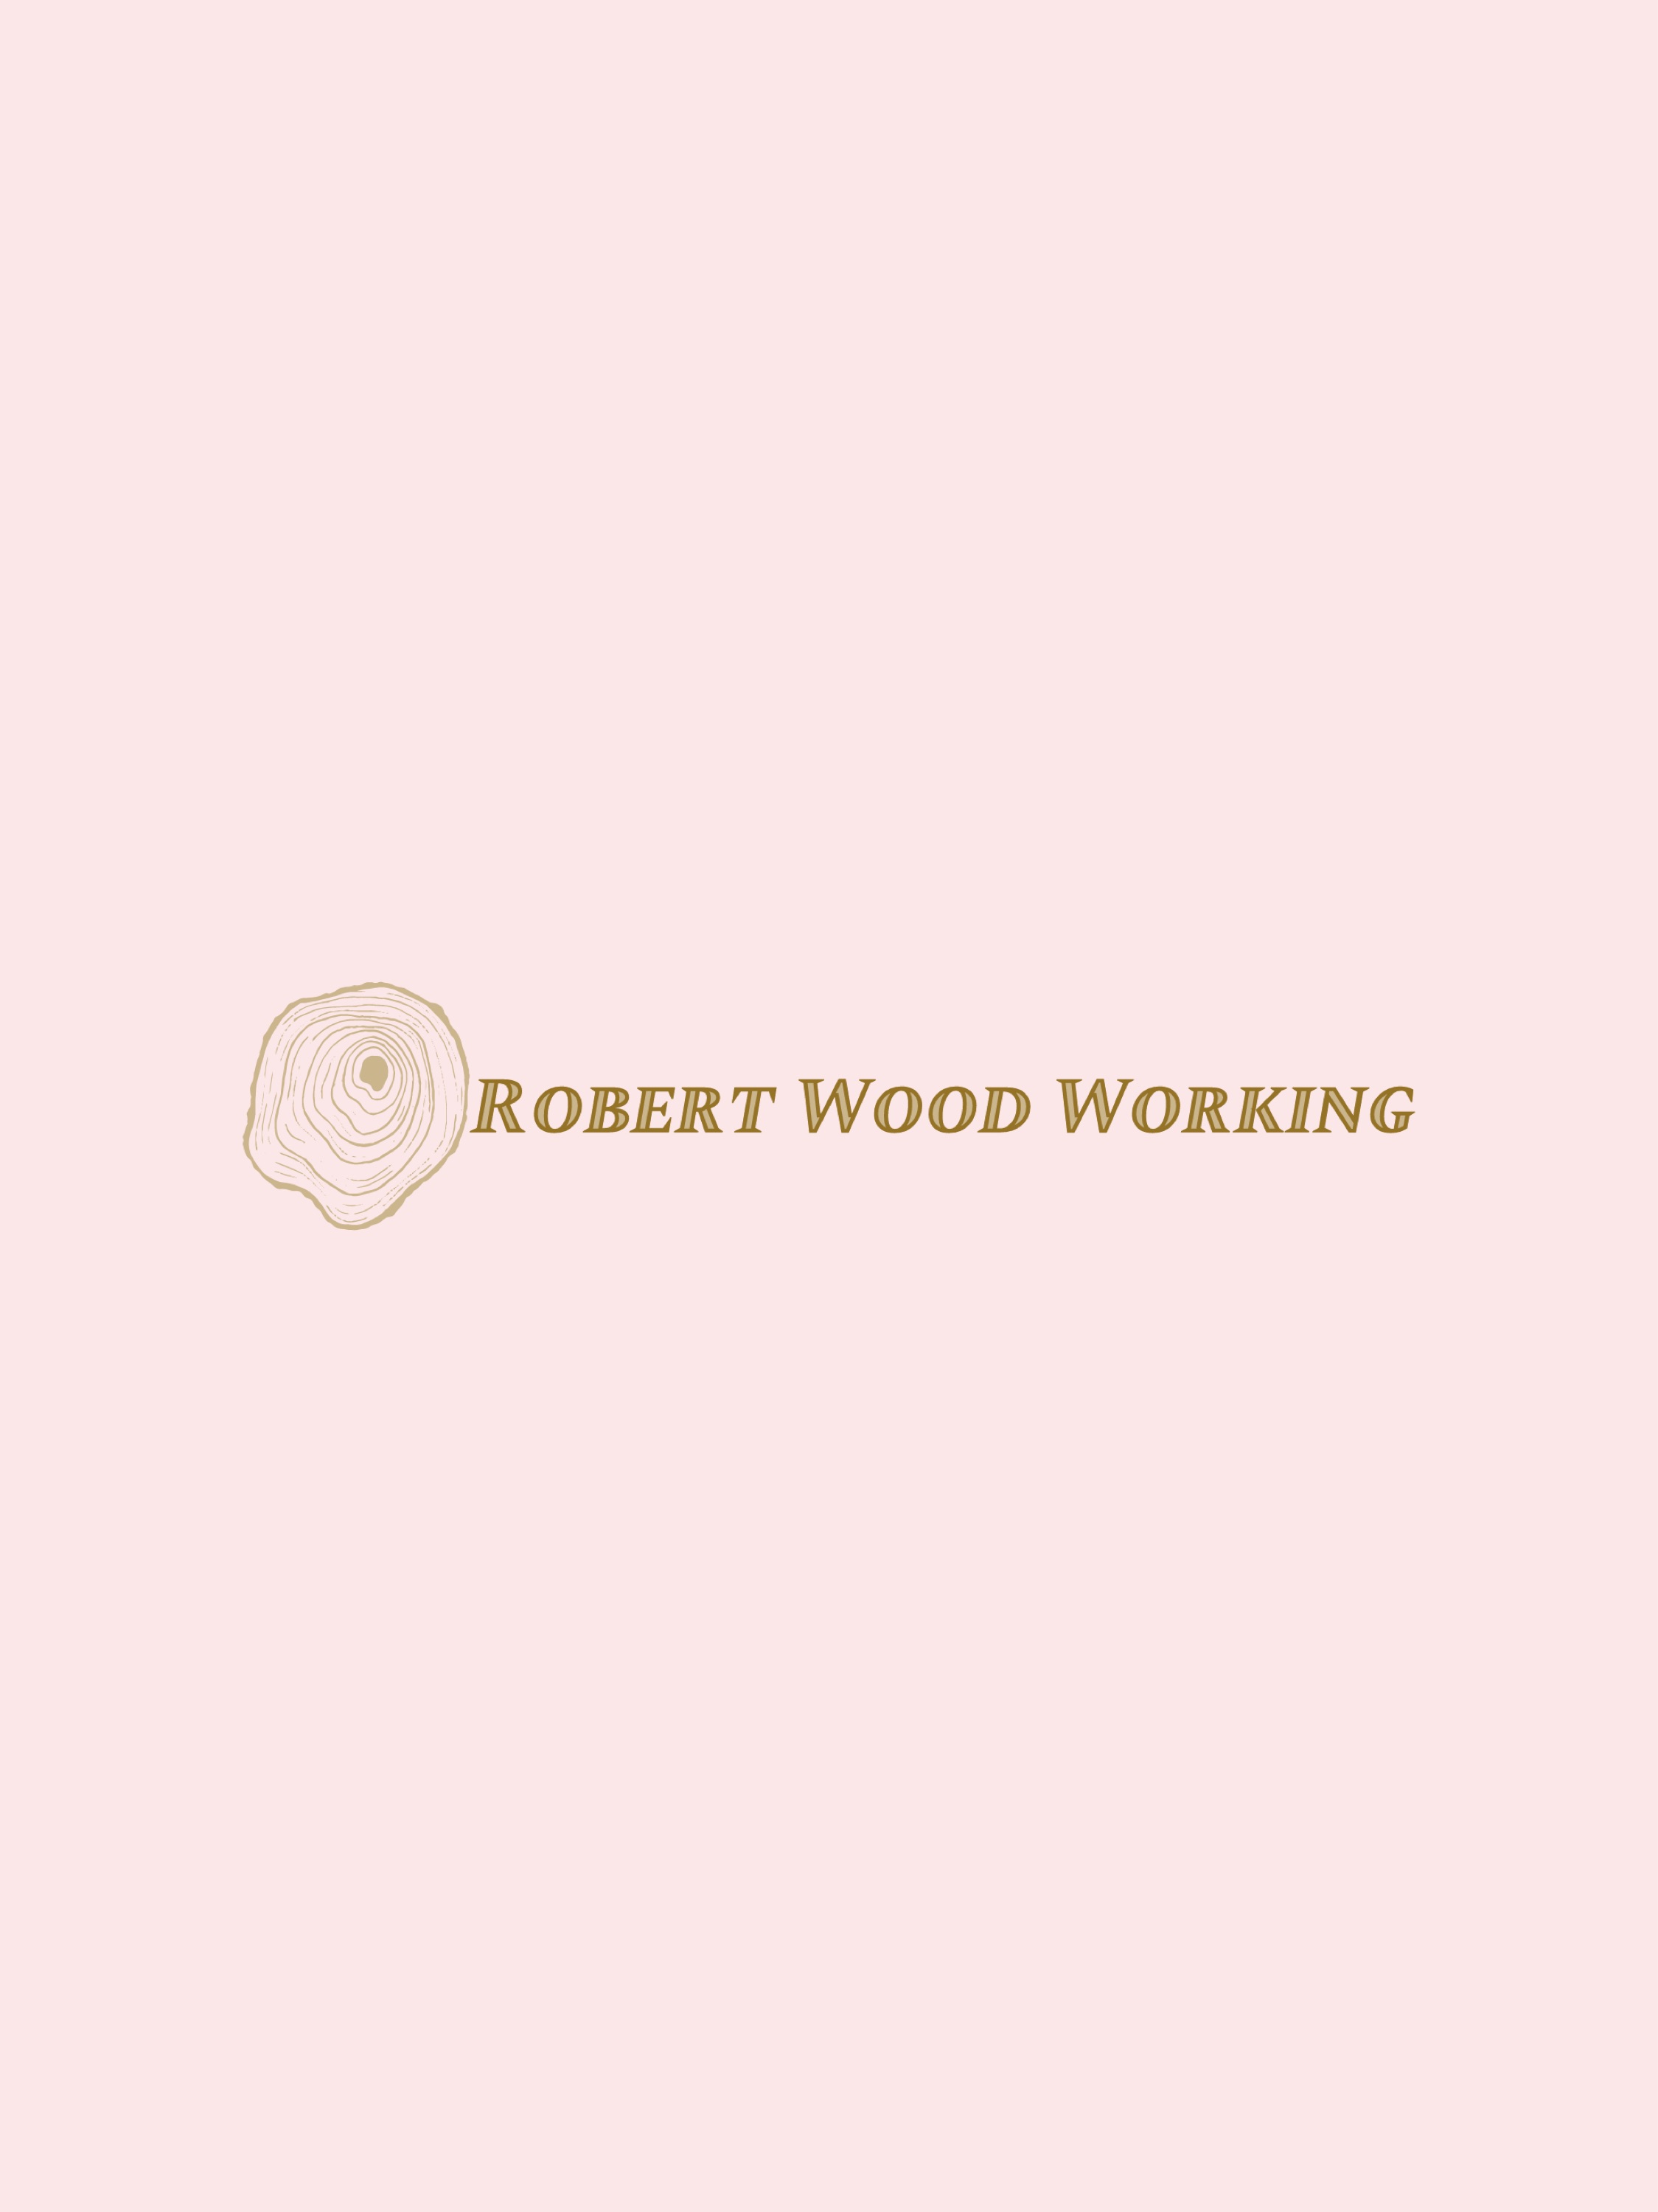 Robert Wood Working Logo